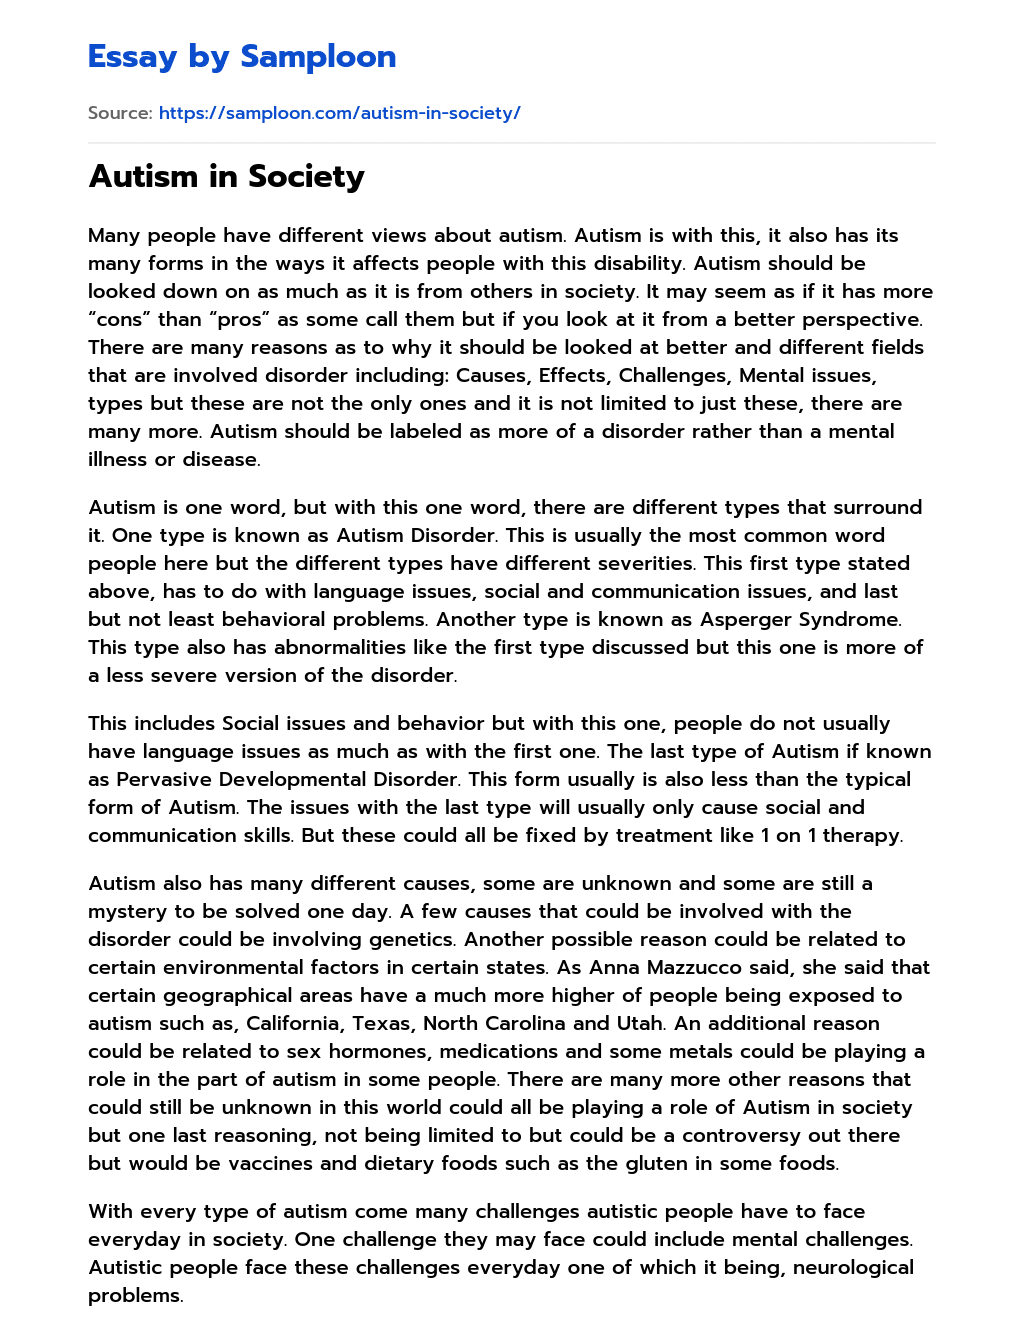 Autism in Society essay